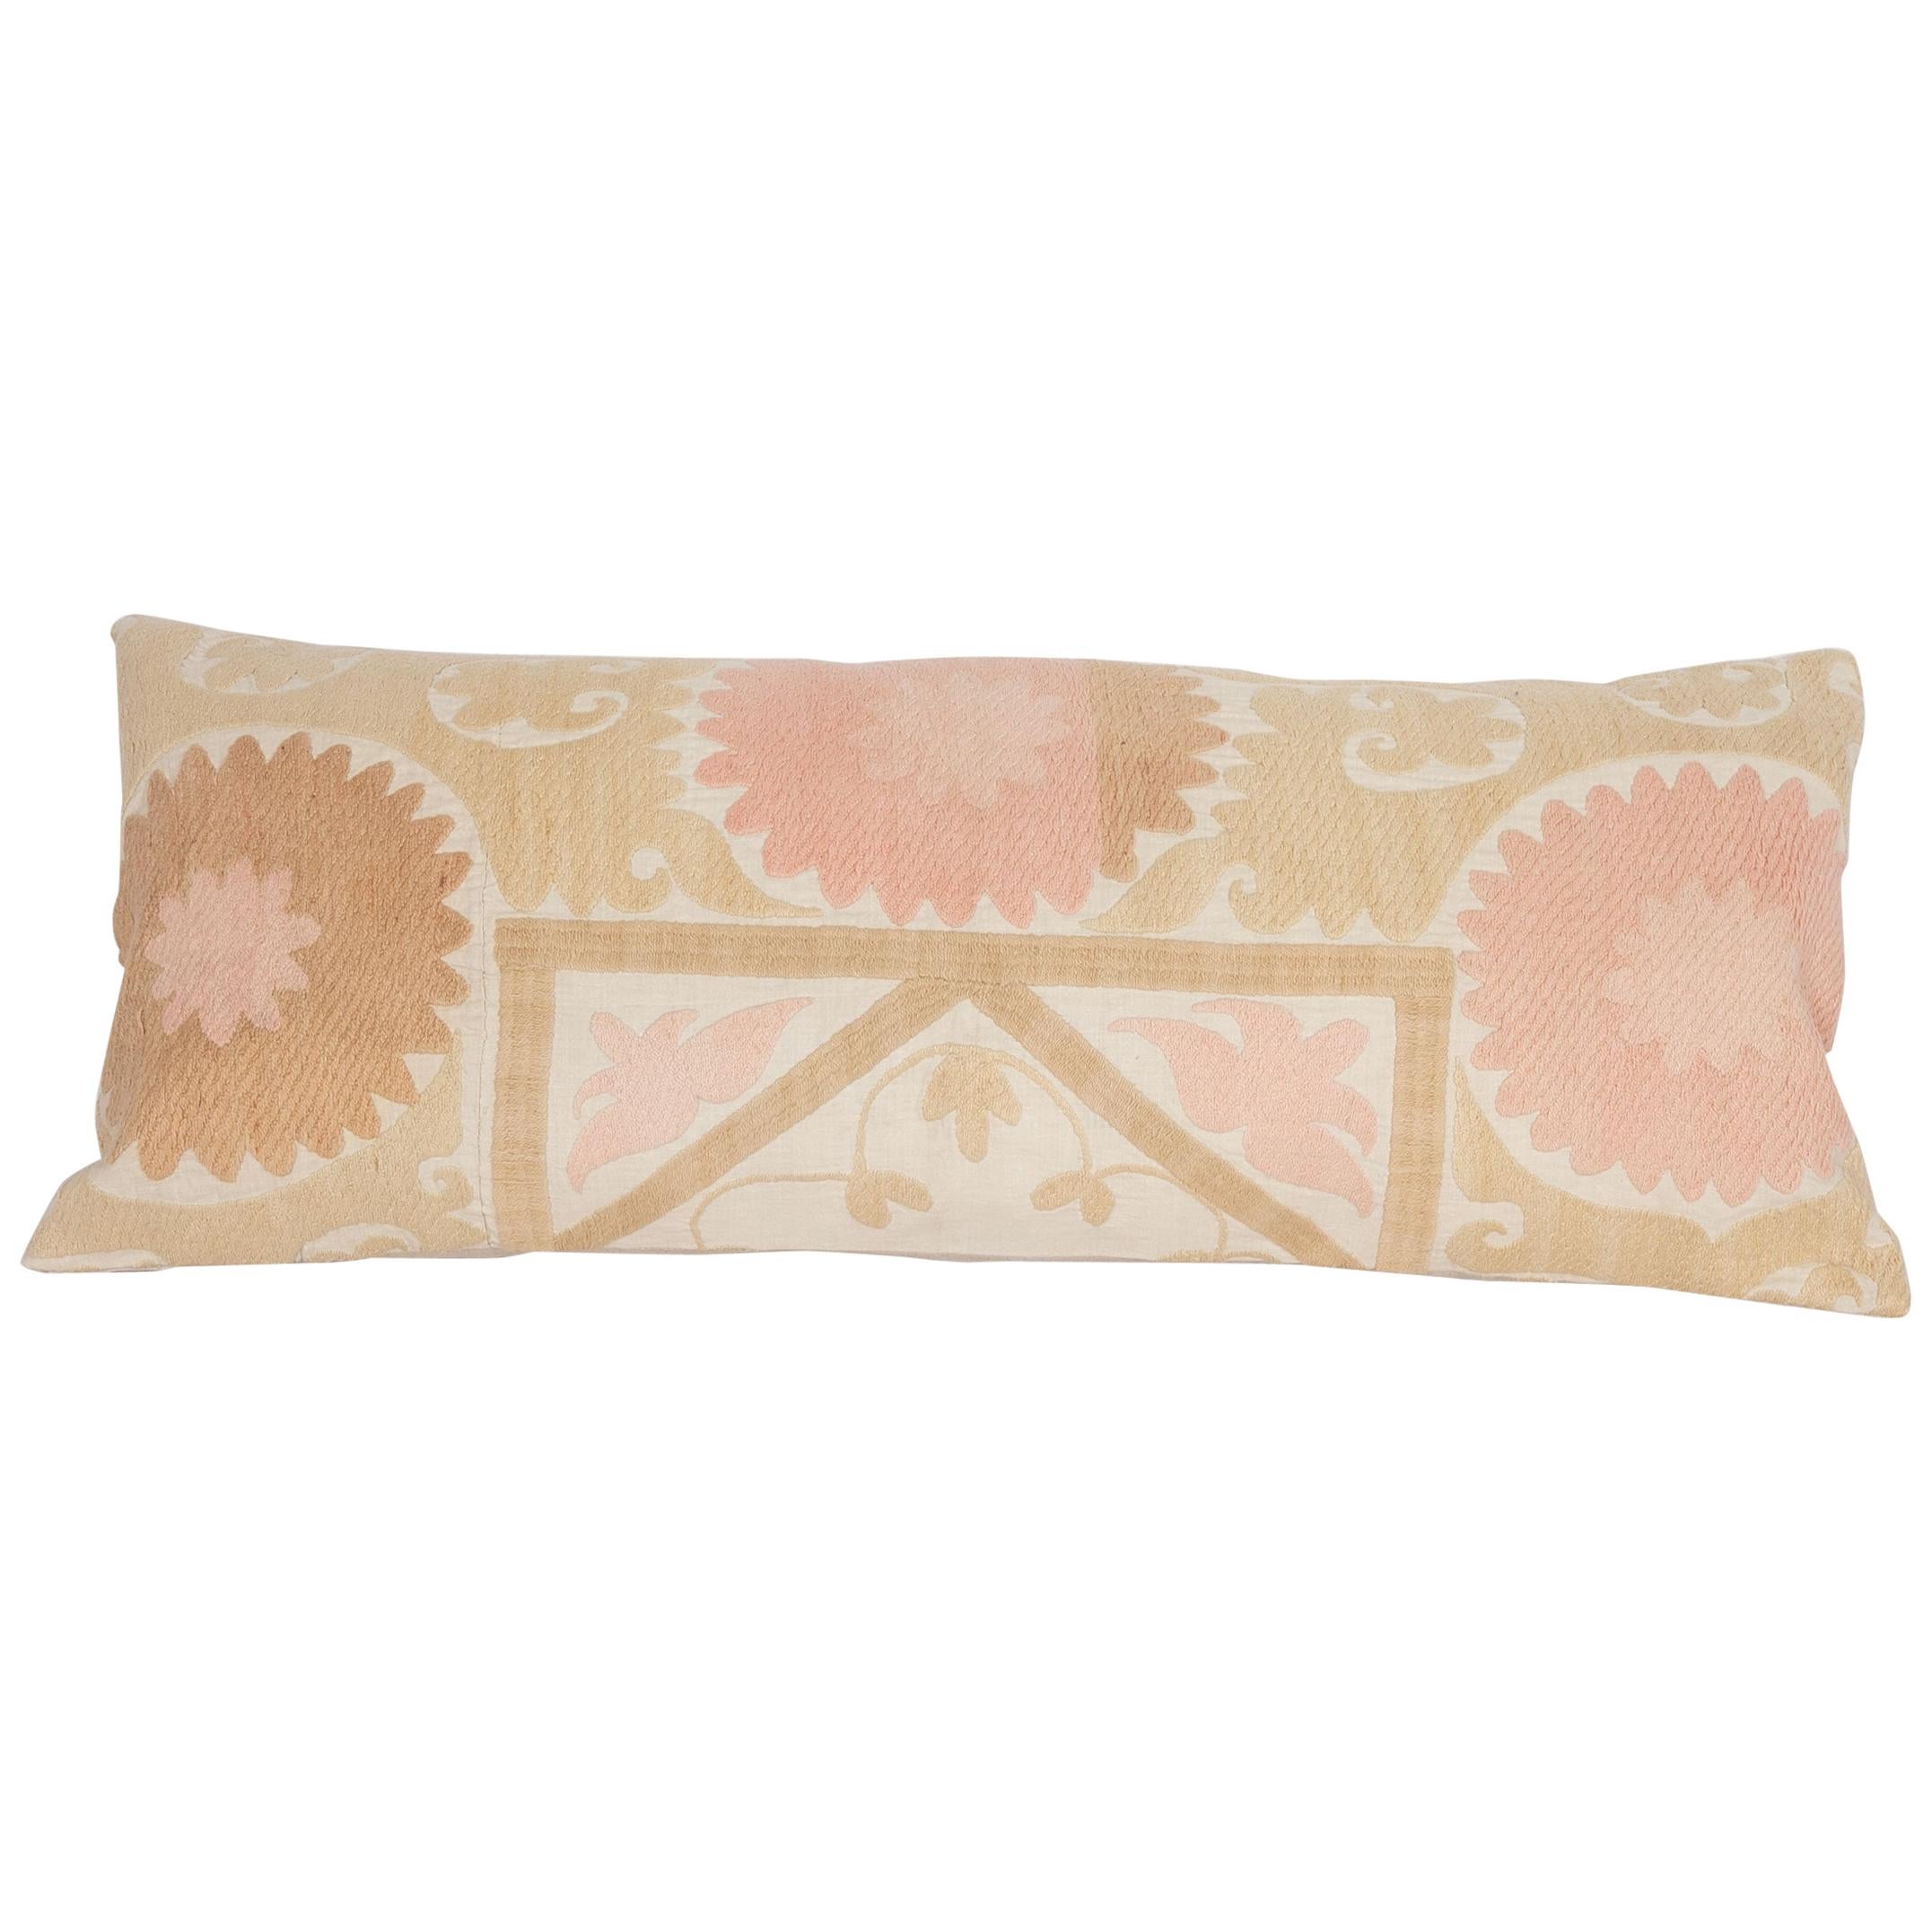 Suzani Lumbar Pillow Case Fashioned from a Mid-20th Century Uzbek Suzani